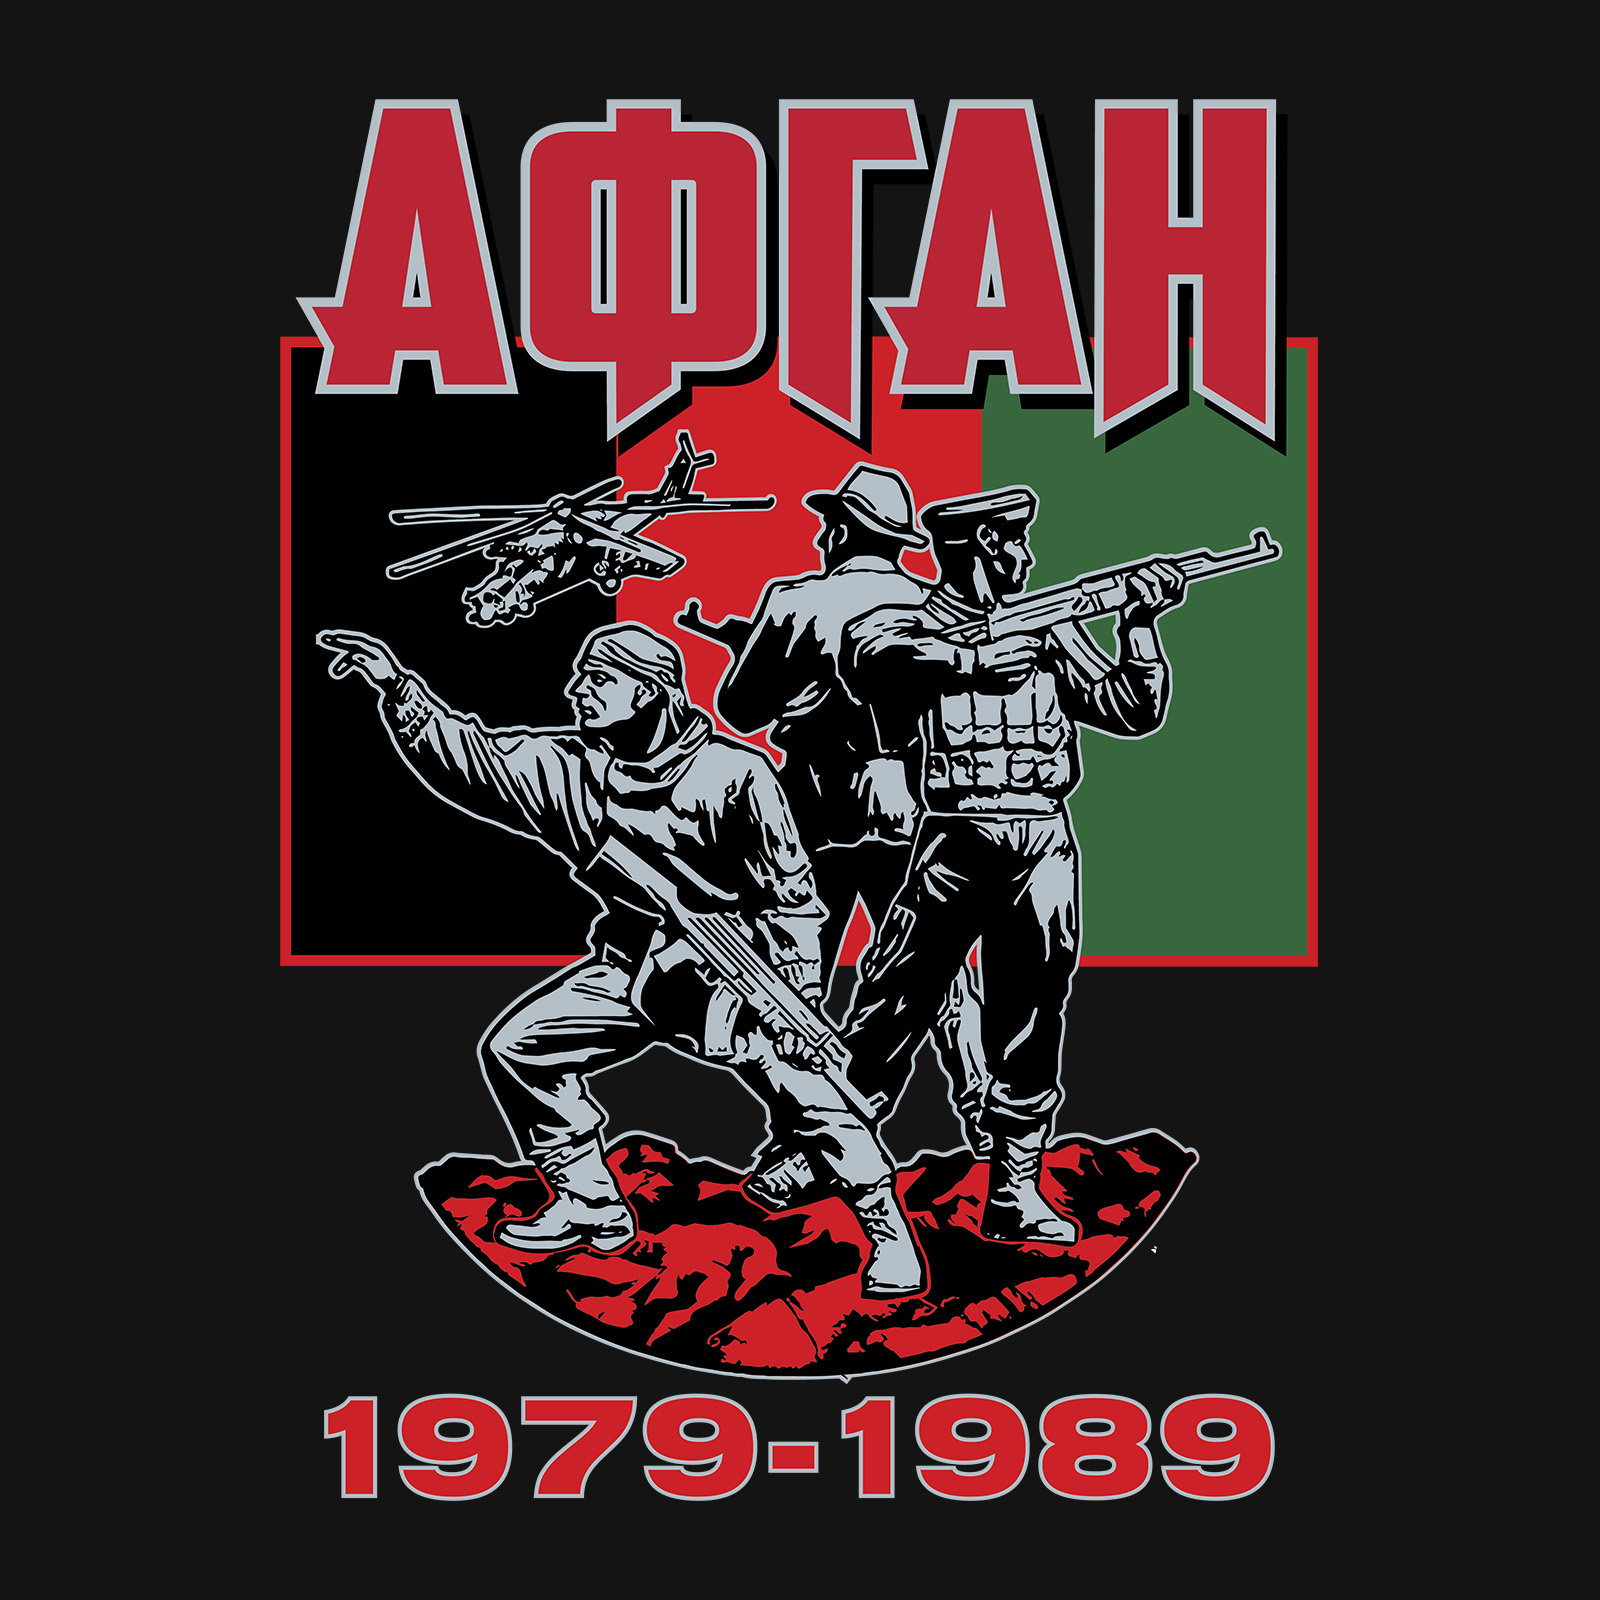 Мужская футболка ветерану Афгана 